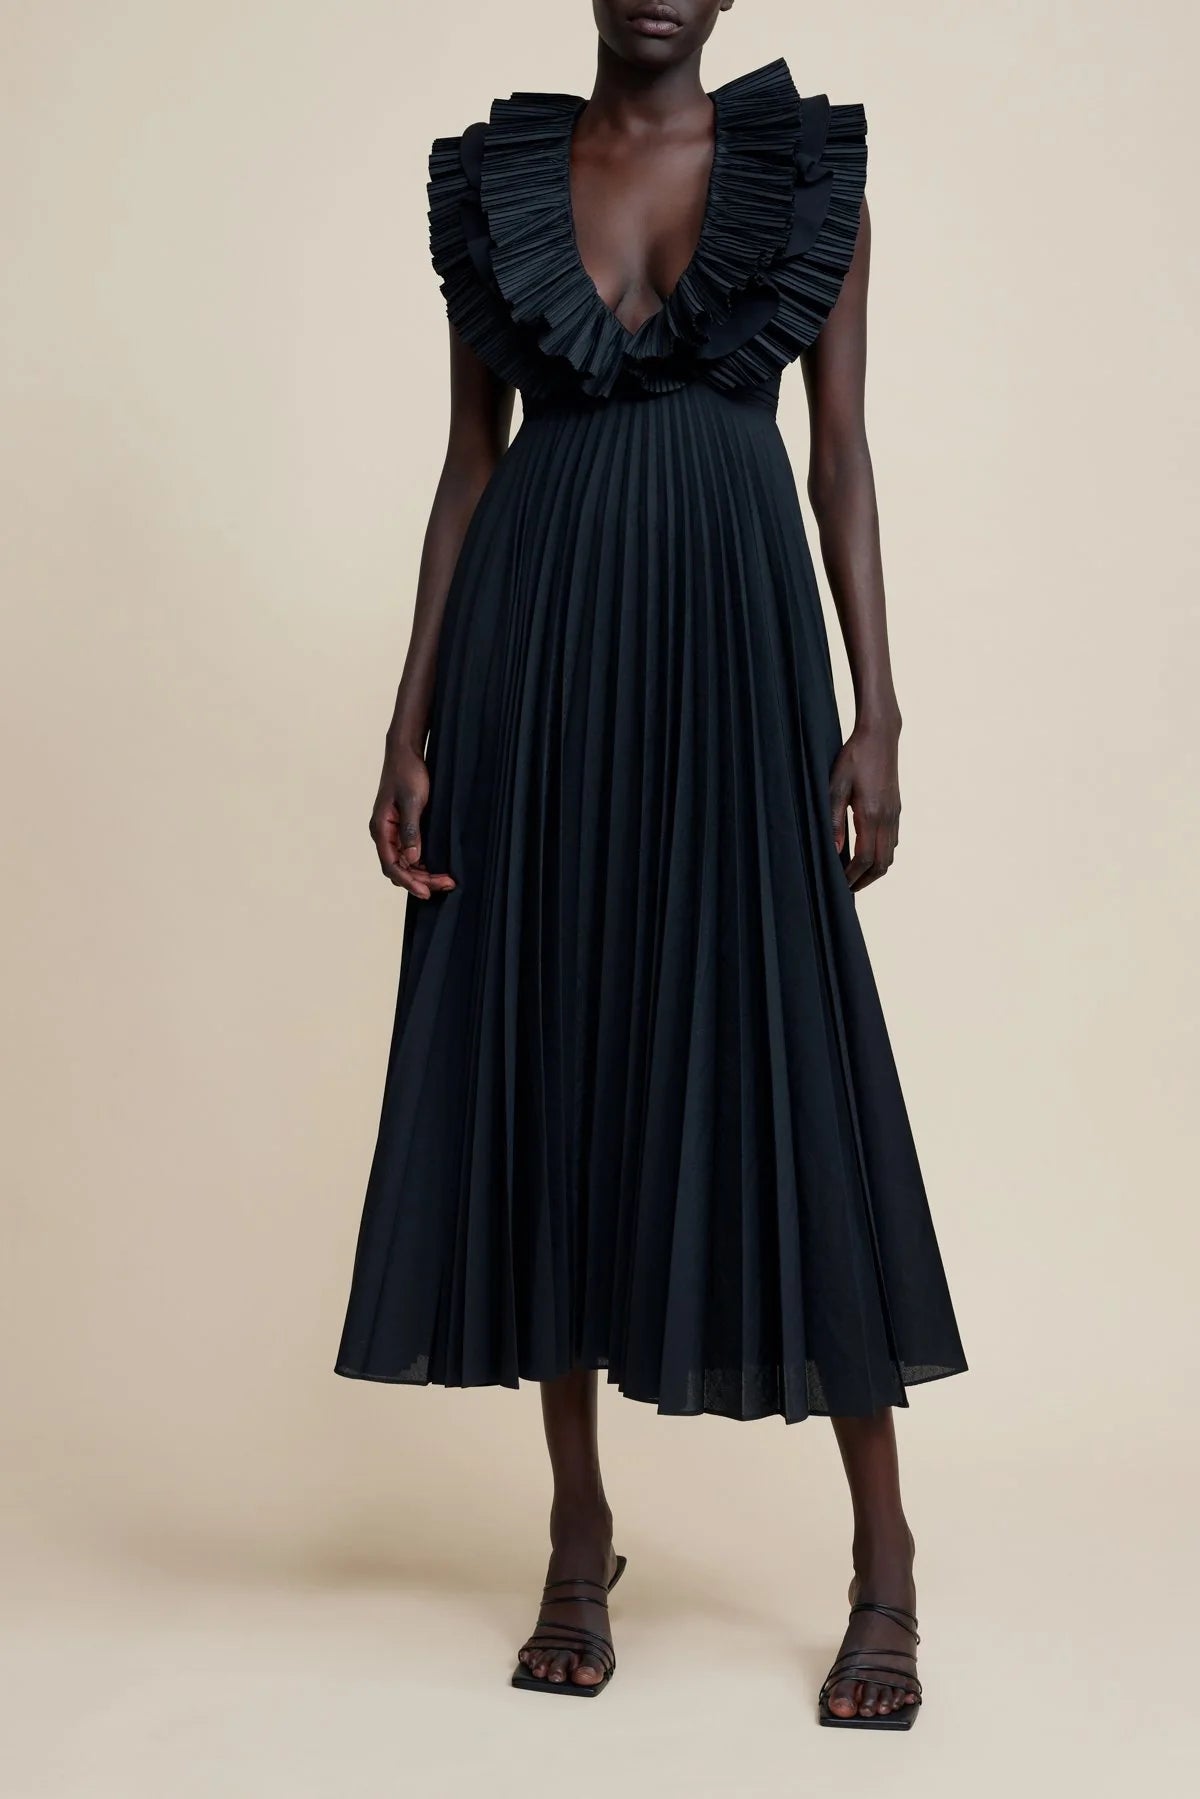 Acler Elsher Maxi Dress in Black - Estilo Boutique